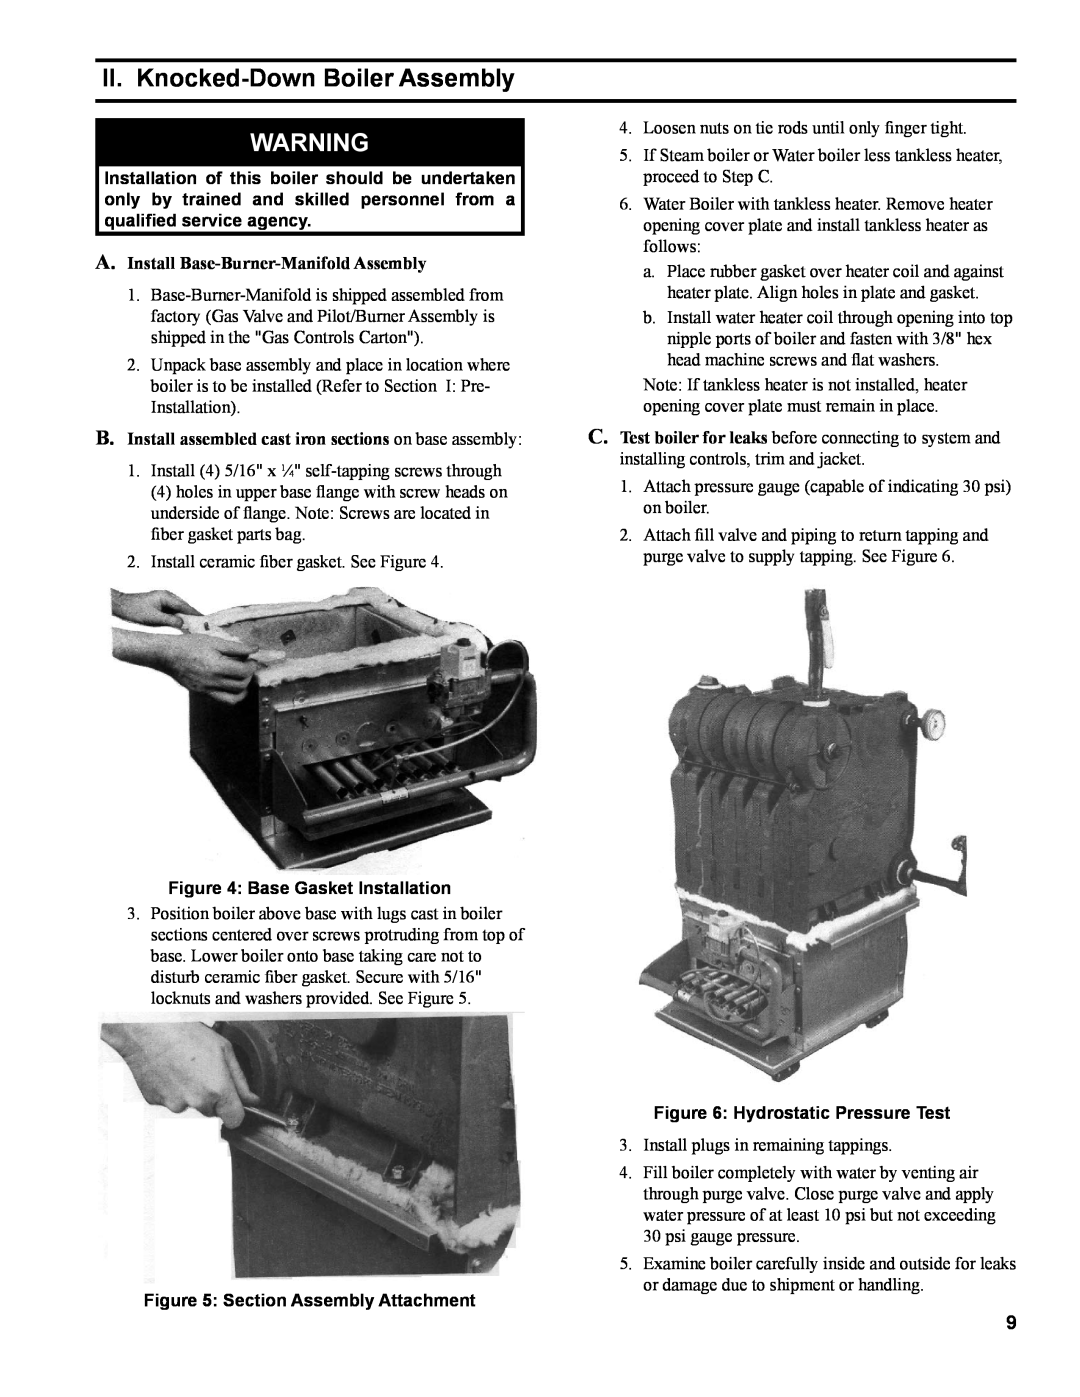 Burnham IN10 manual II. Knocked-Down Boiler Assembly, A. Install Base-Burner-Manifold Assembly, Base Gasket Installation 